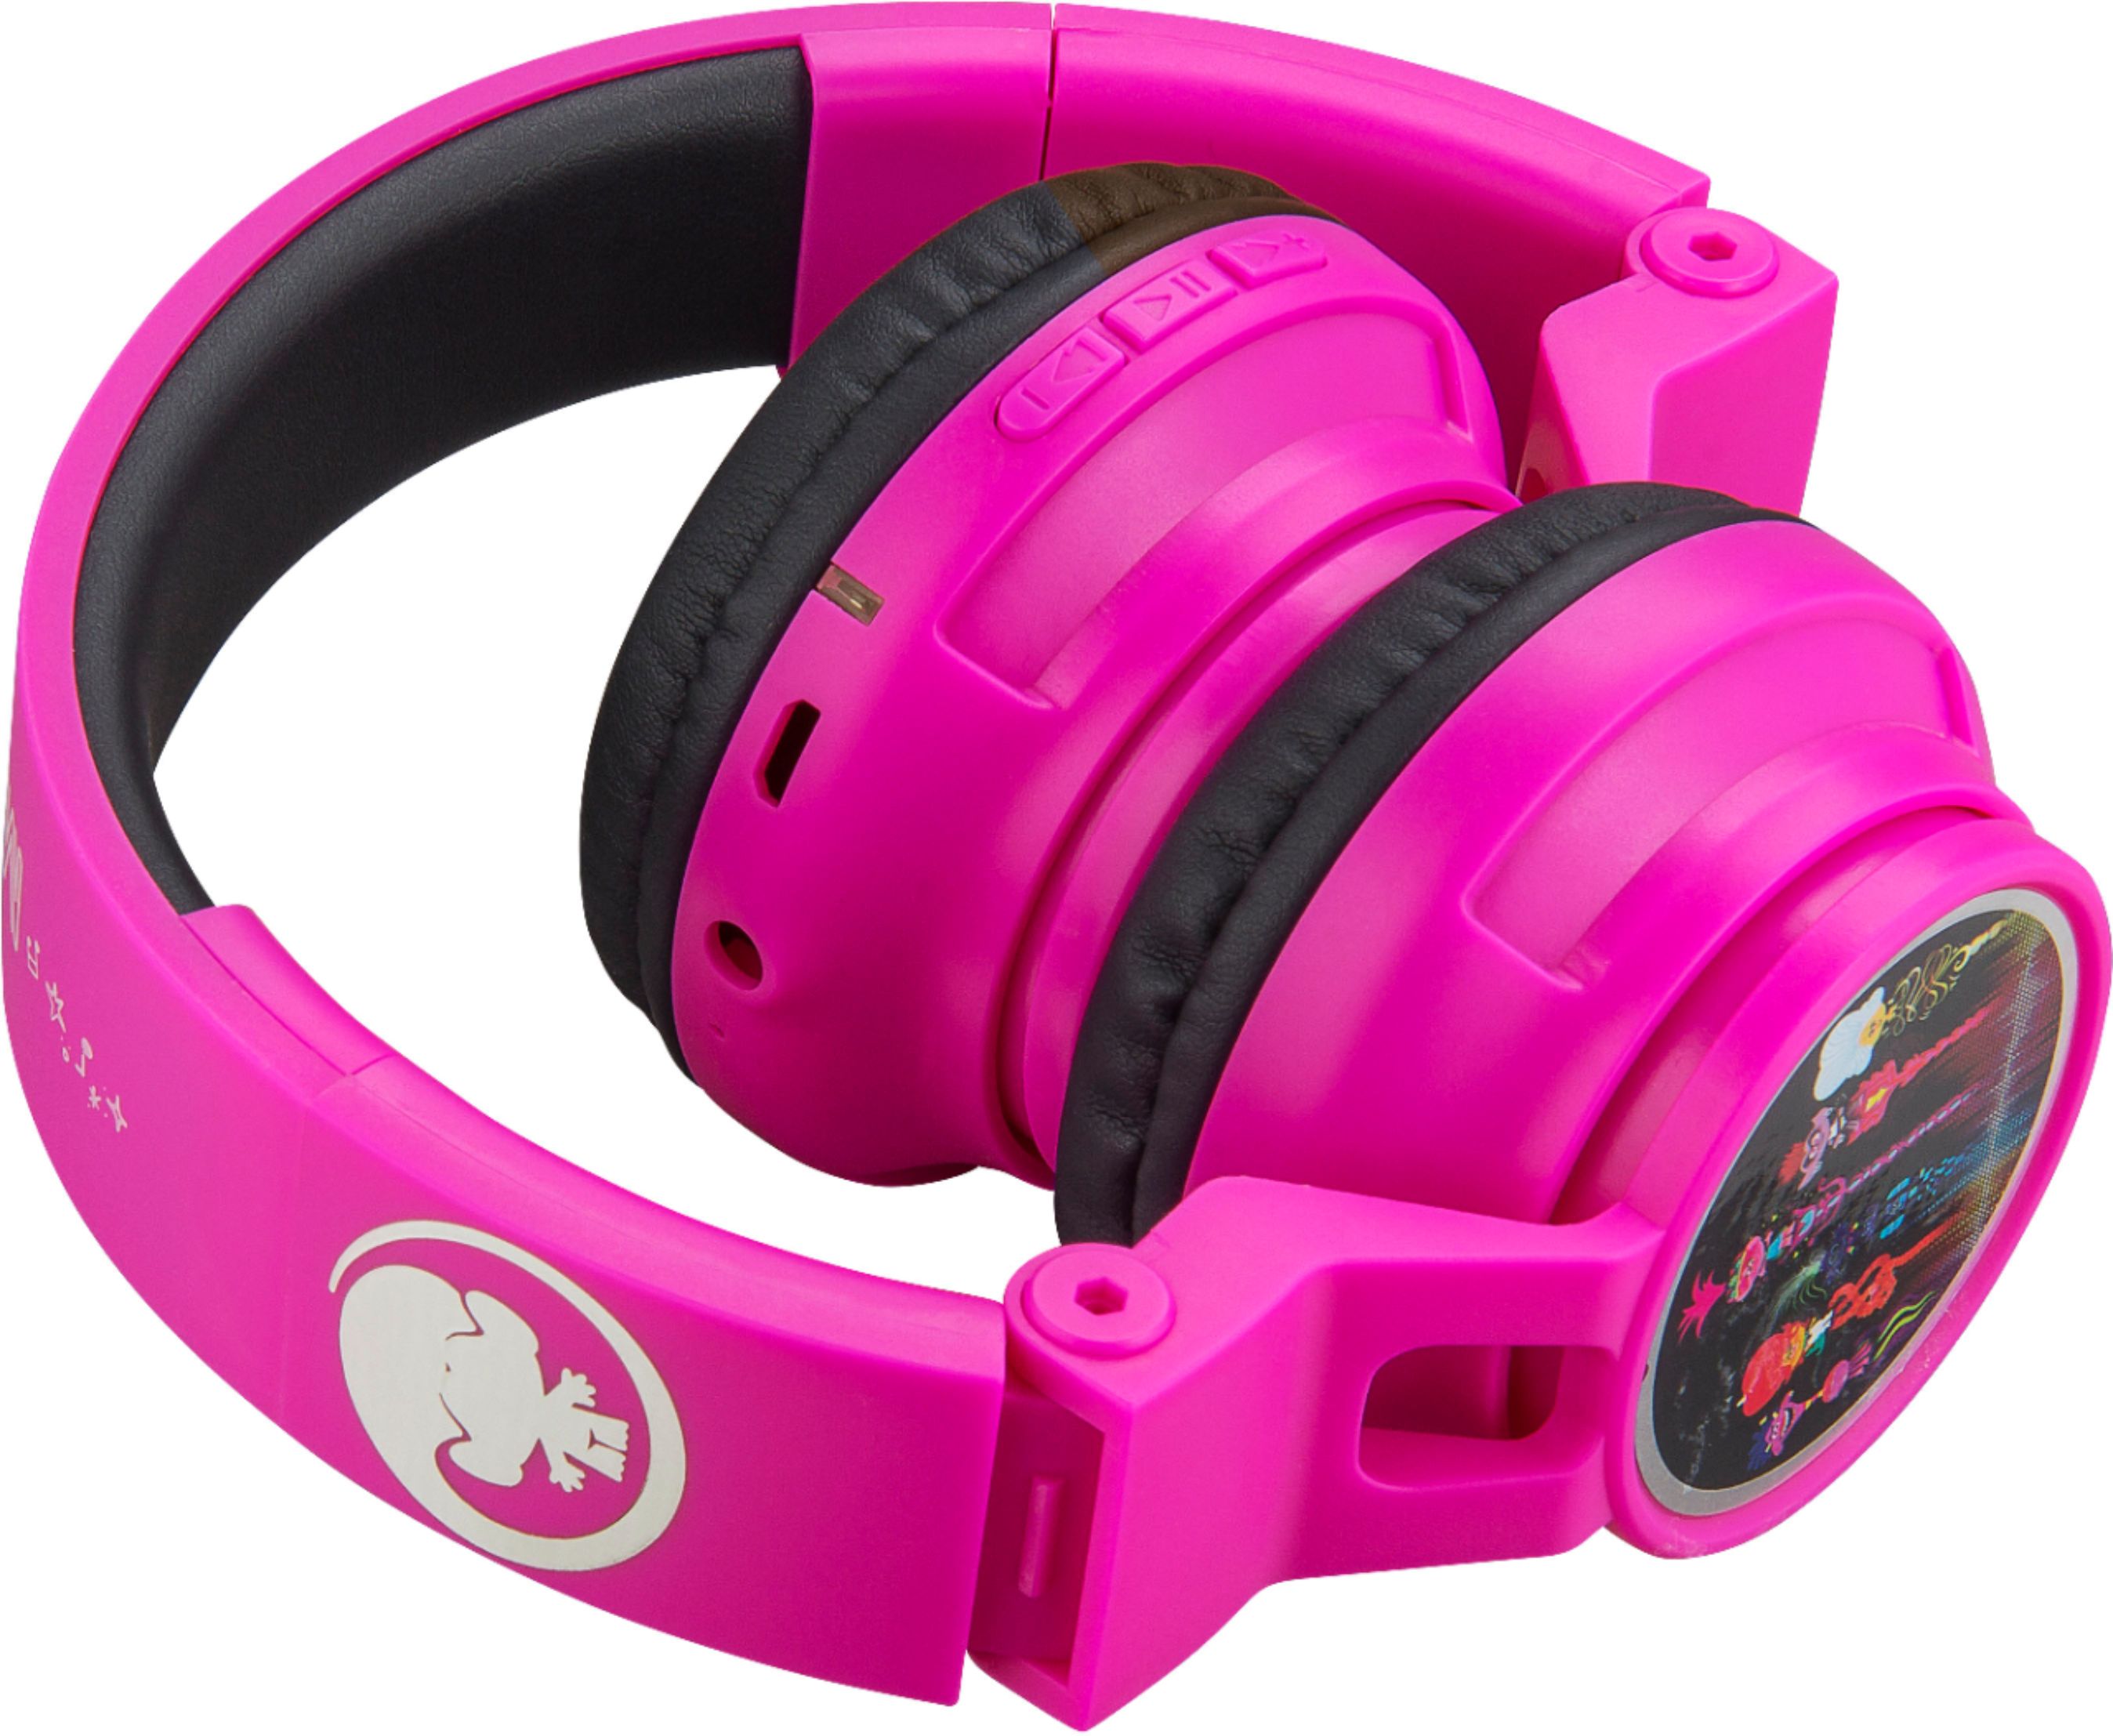 Best Buy: Trolls World Tour Wireless Over-the-Ear Headphones Pink/Black